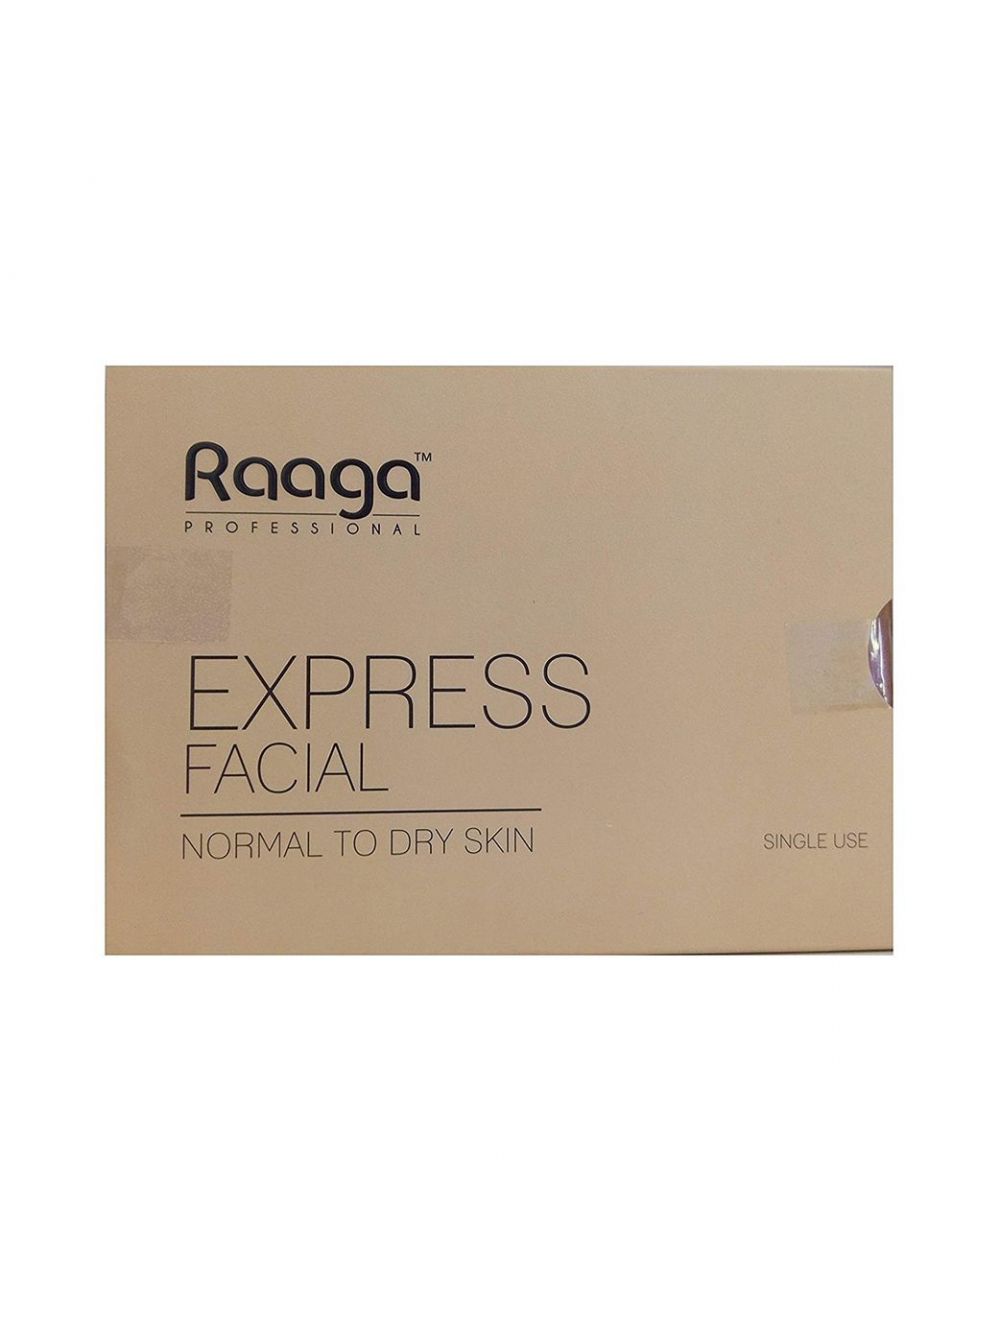 Raaga Professional Express Facial Kit for Normal to Dry Skin